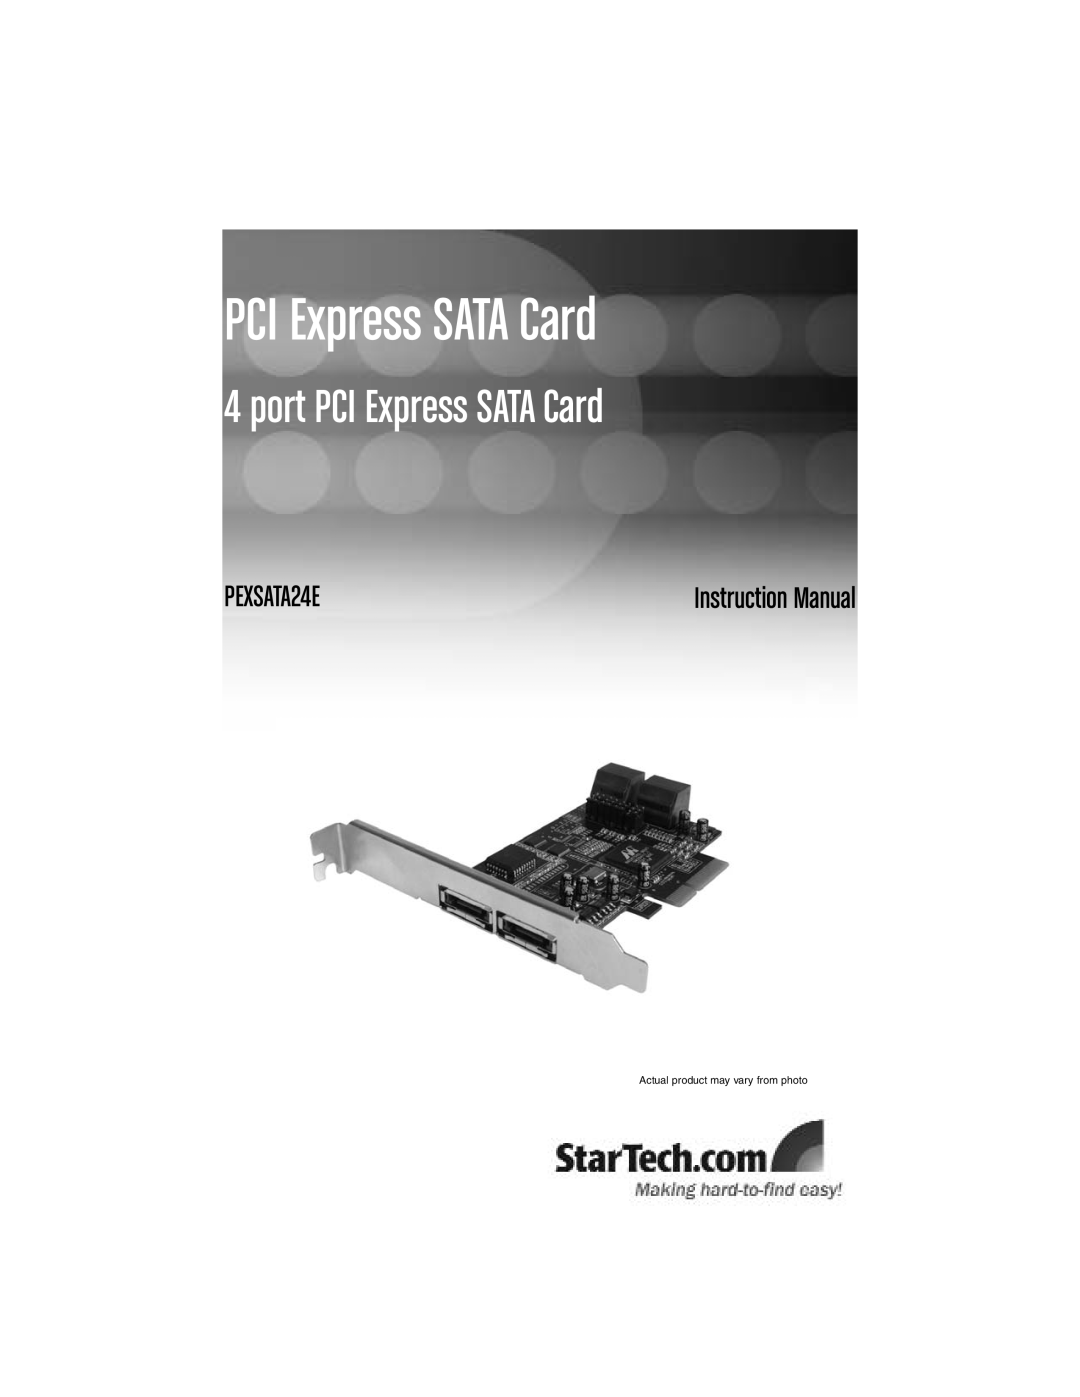 StarTech.com PEXSATA24E instruction manual Instruction Manual, port PCI Express SATA Card 